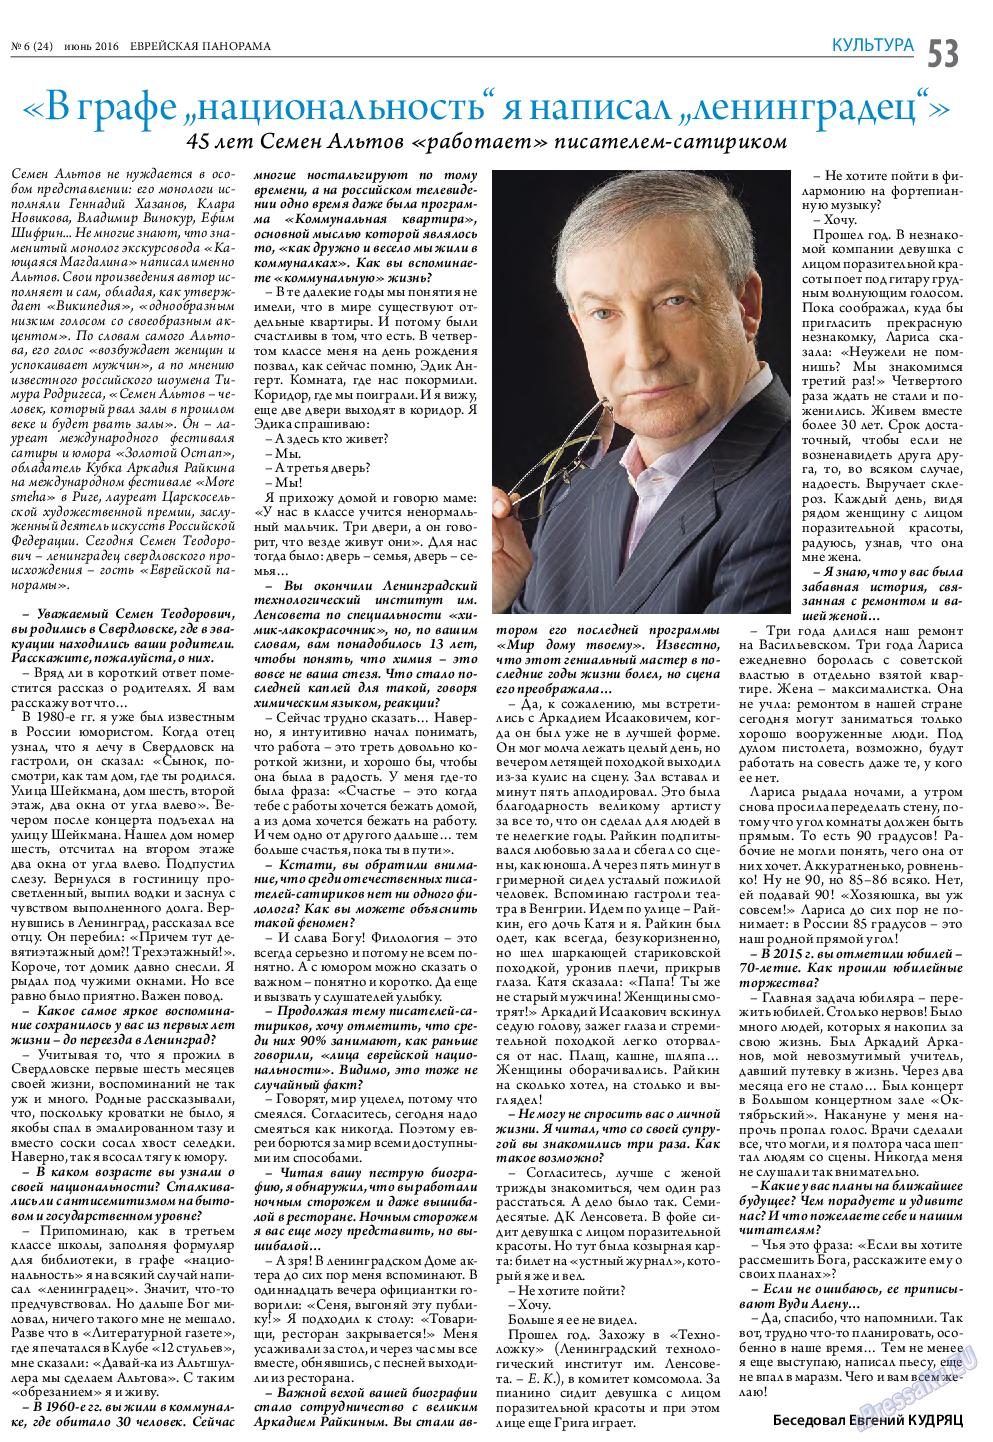 Еврейская панорама, газета. 2016 №6 стр.53